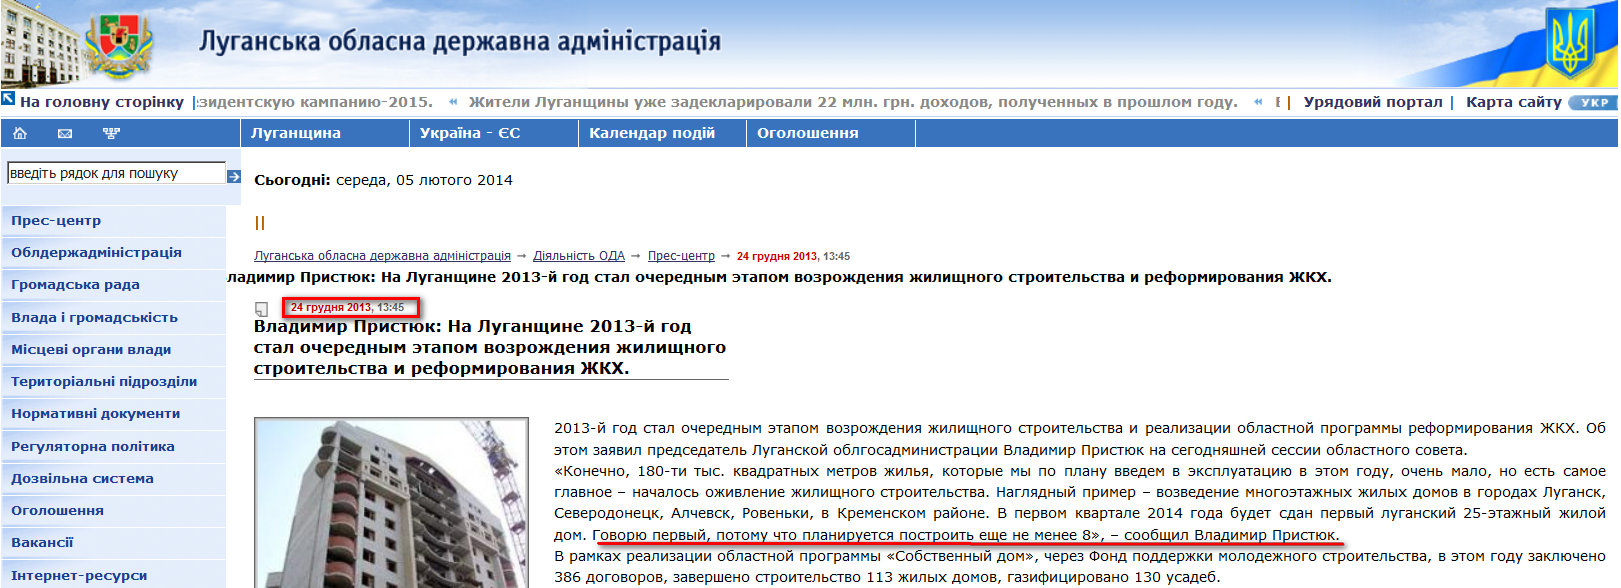 http://www.loga.gov.ua/oda/press/news/2013/12/24/news_62110.html